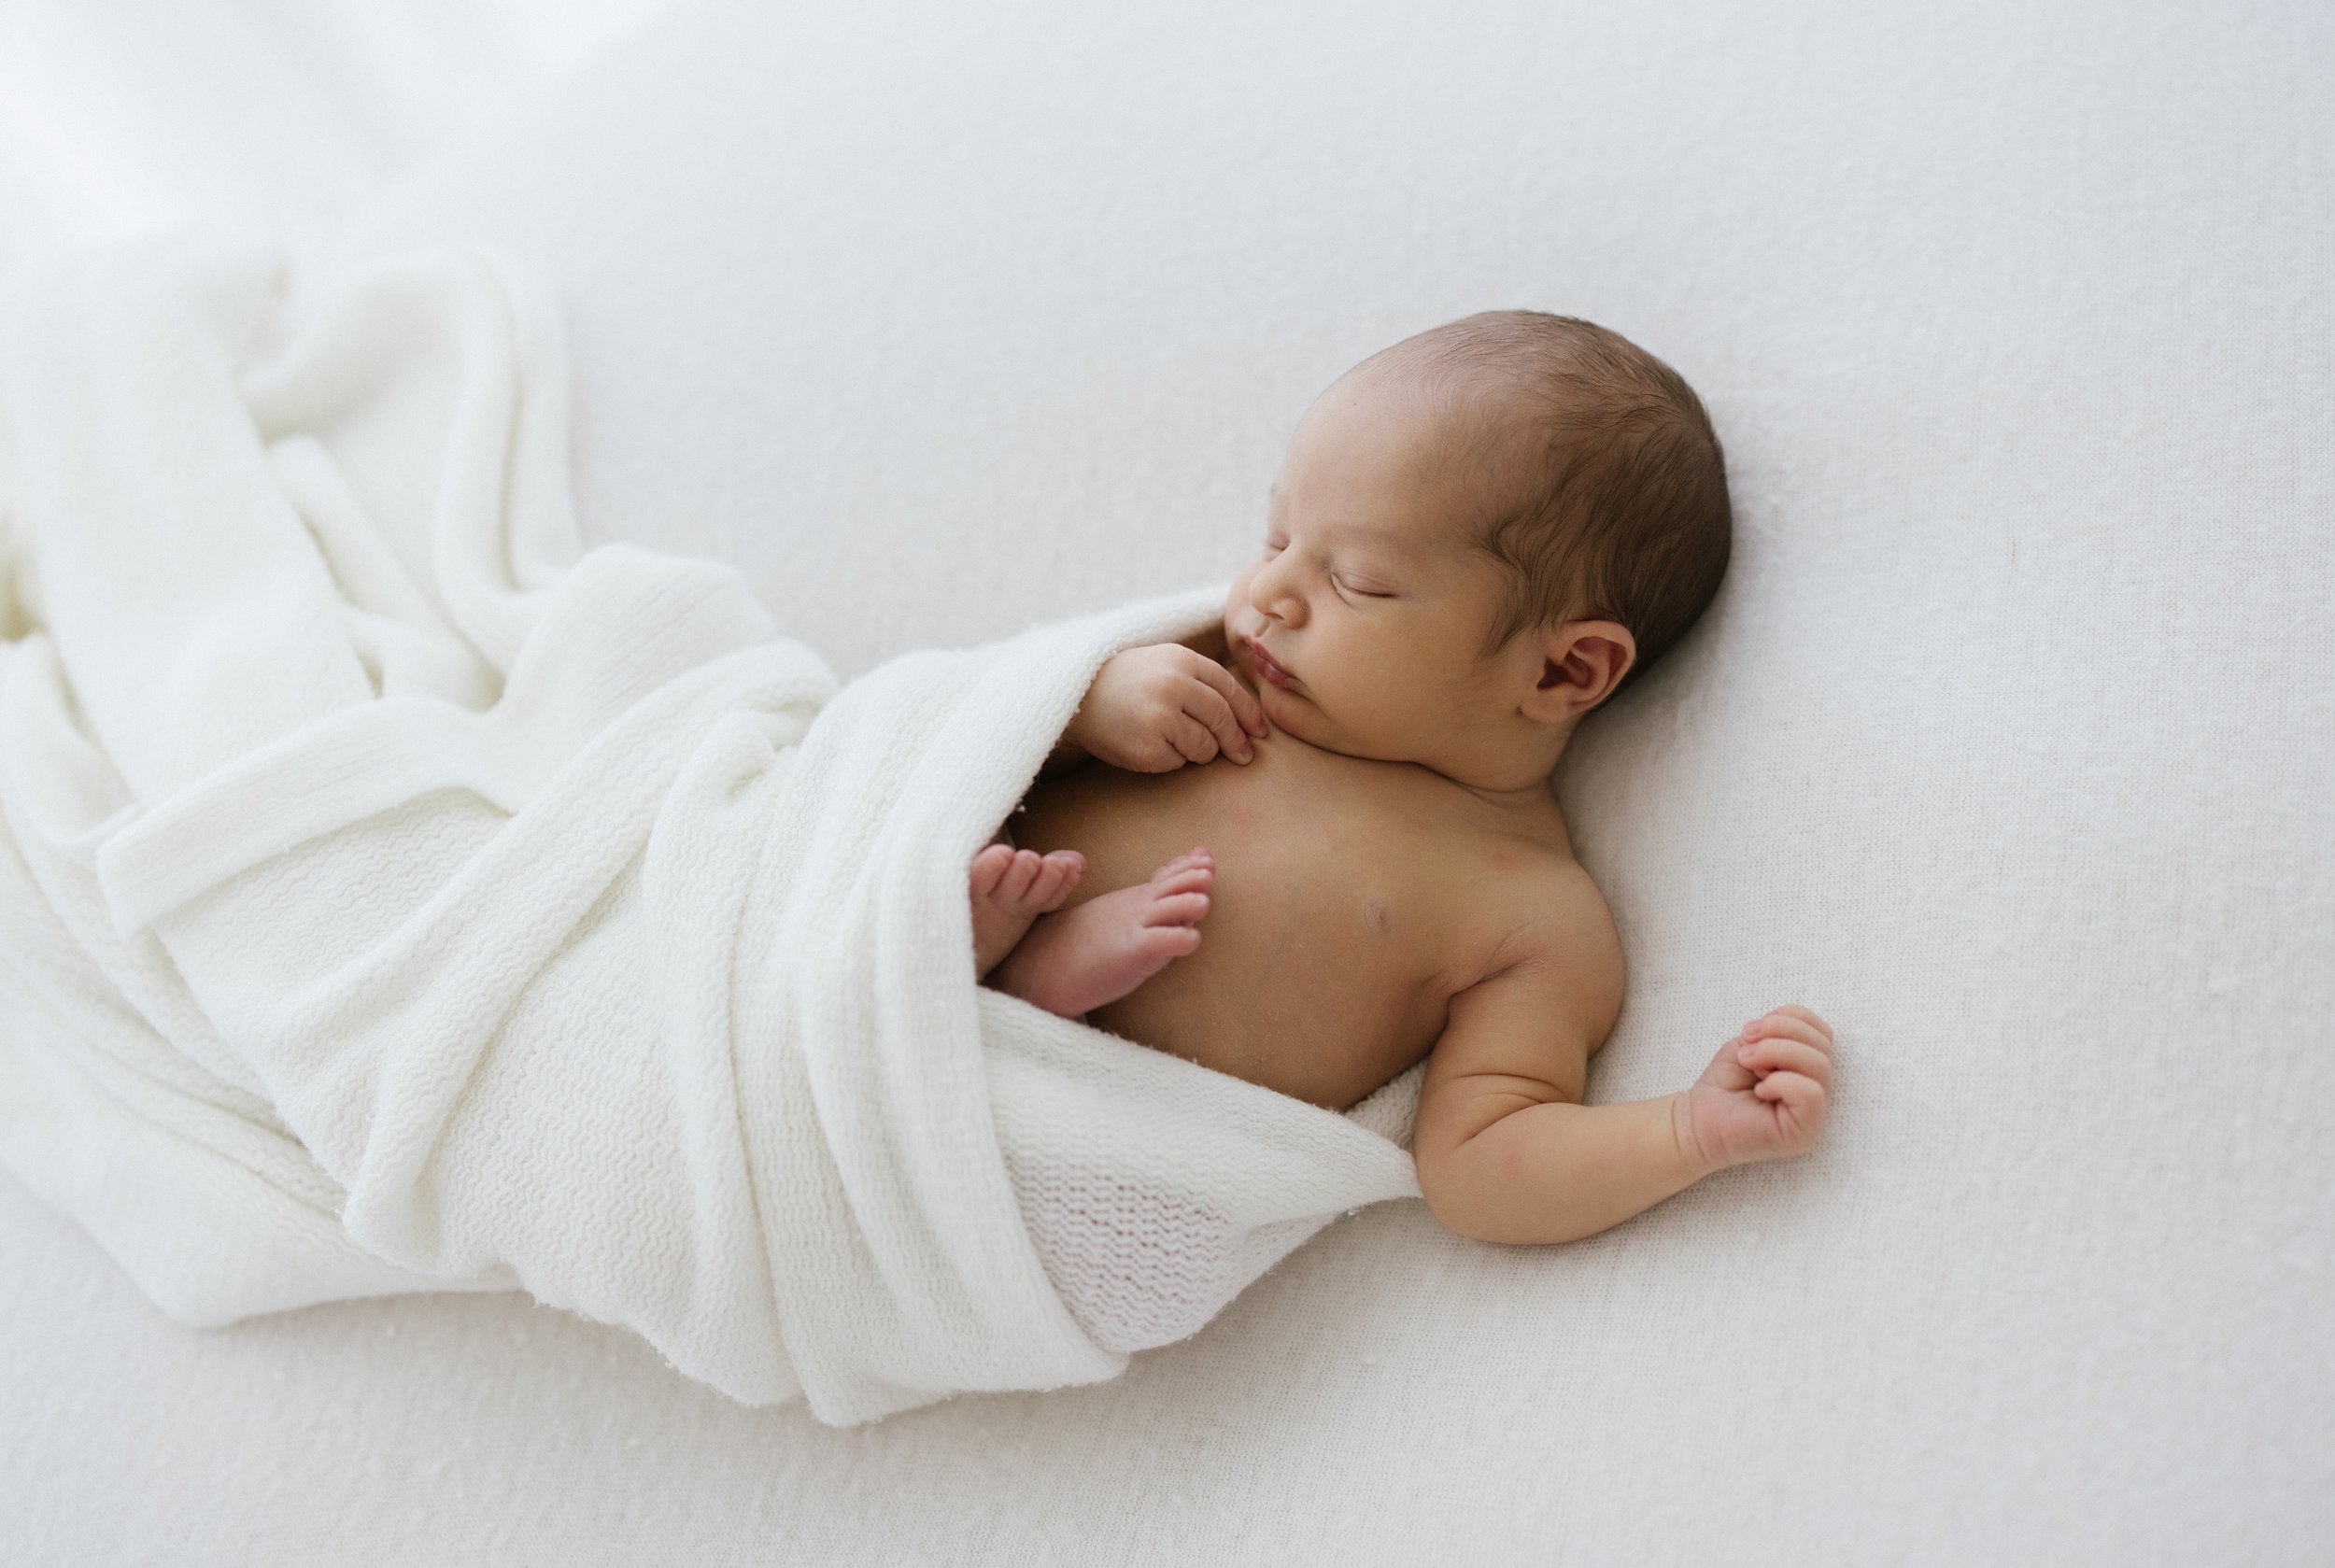  newborn baby cuddled up in a white wrap blanket  